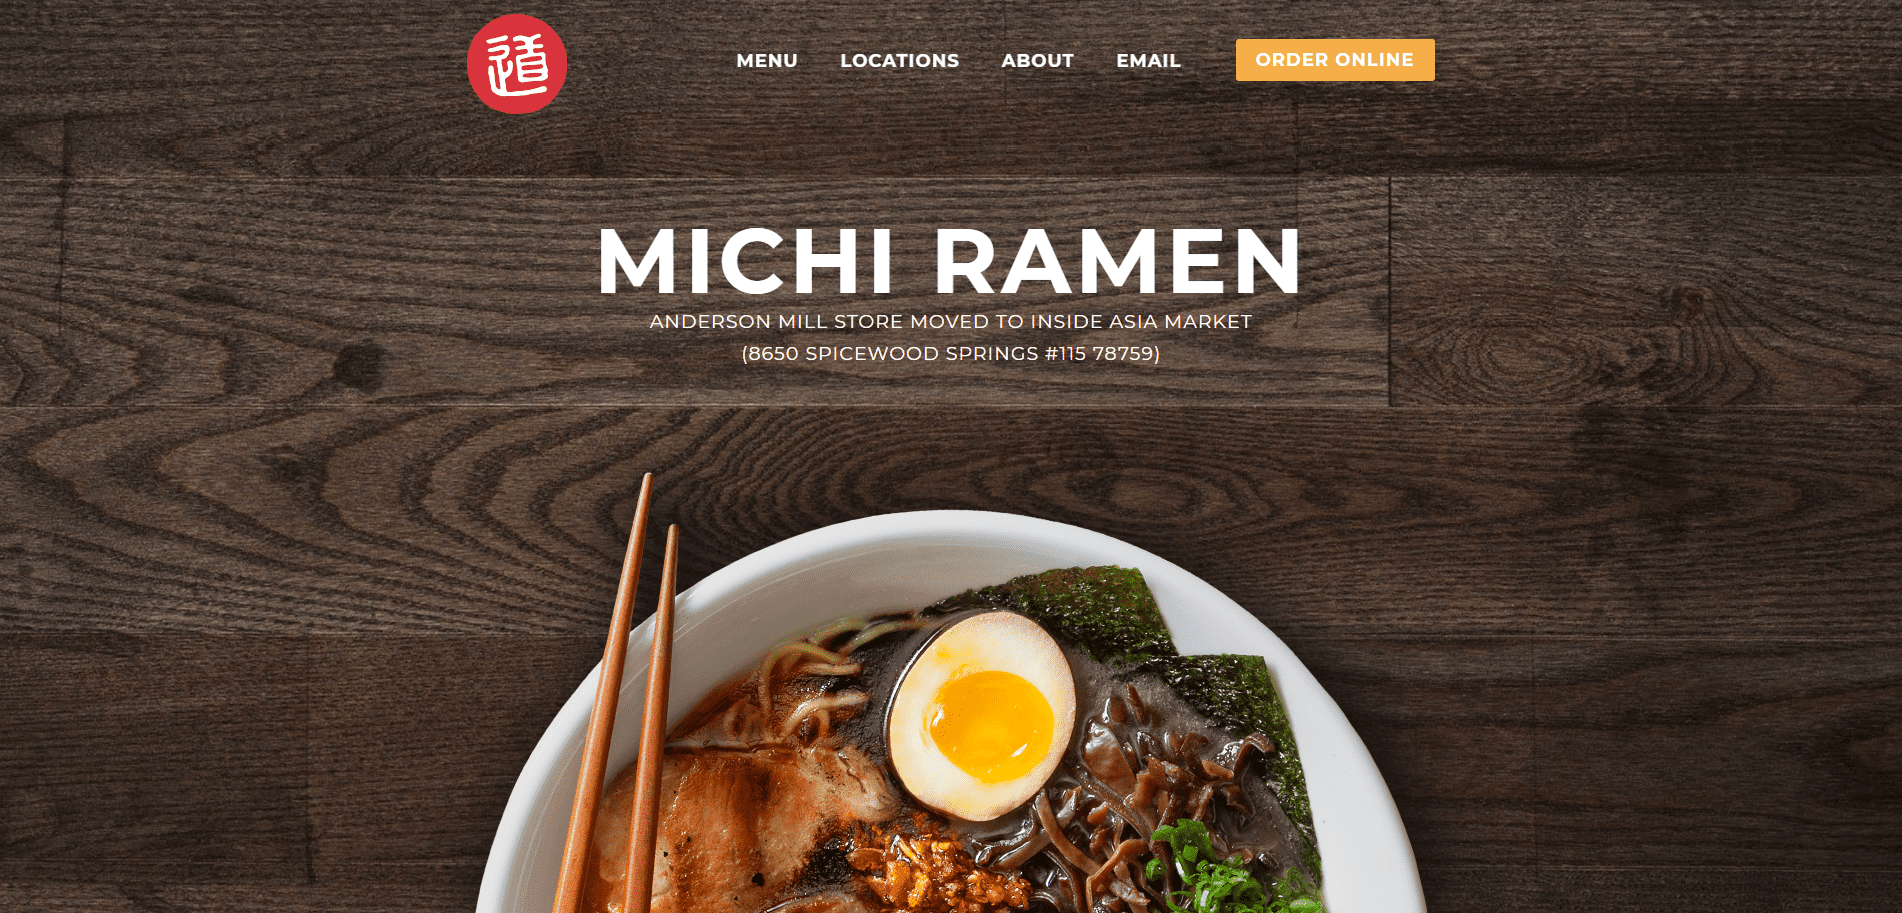 Michi Ramen restaurant websites